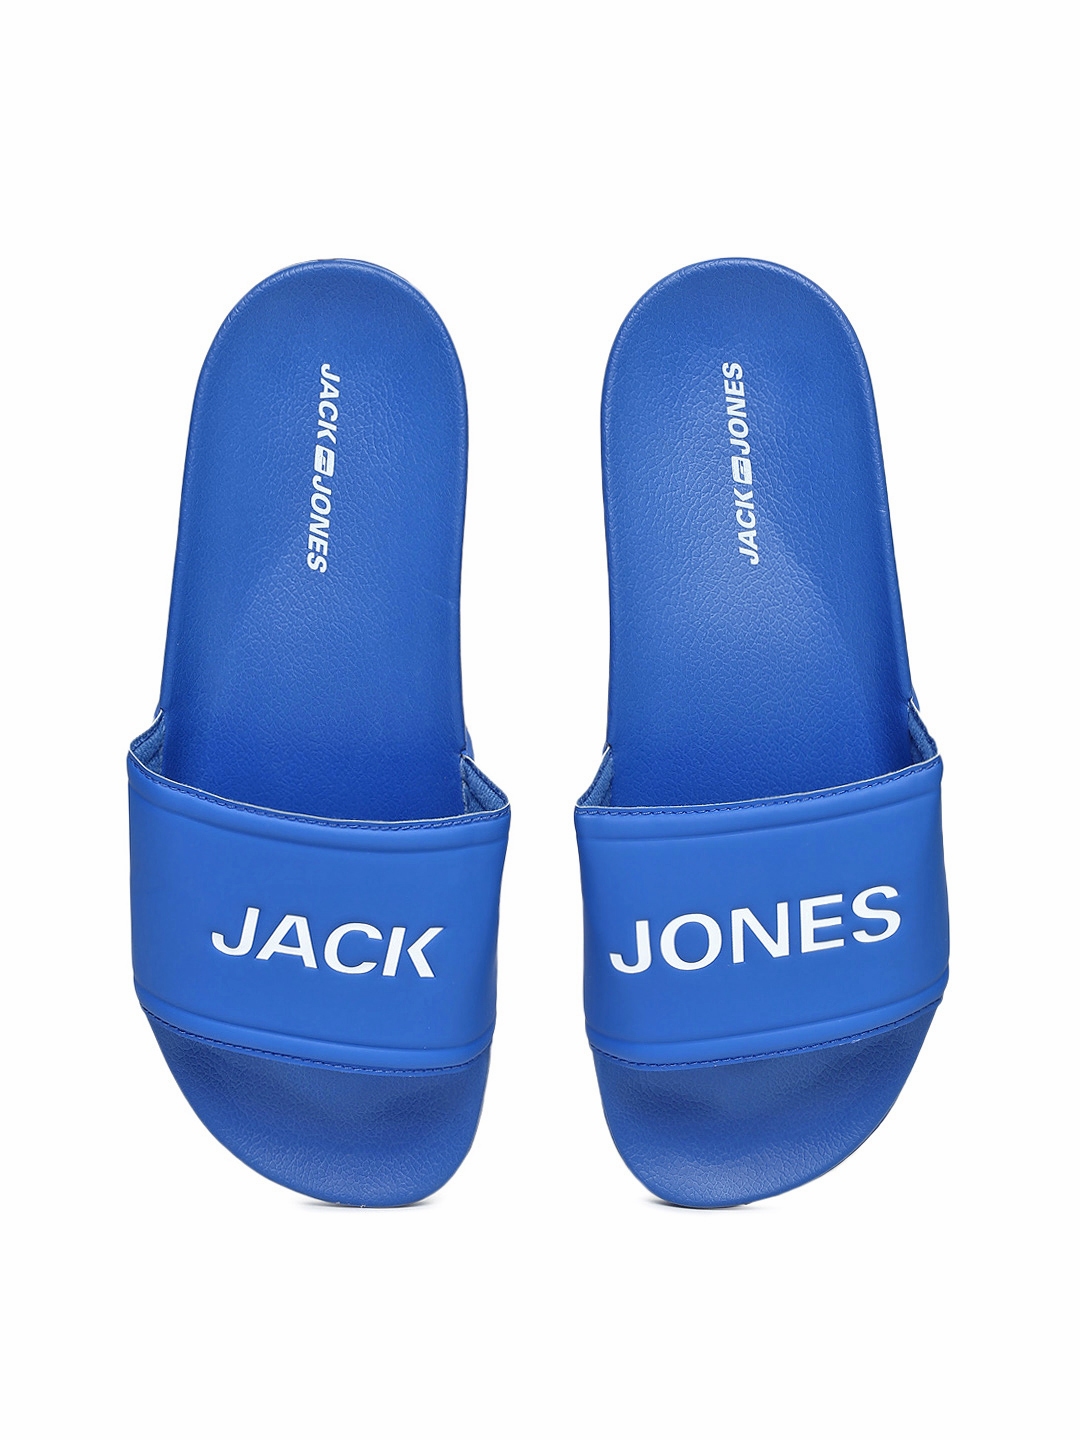 jack n jones flip flops